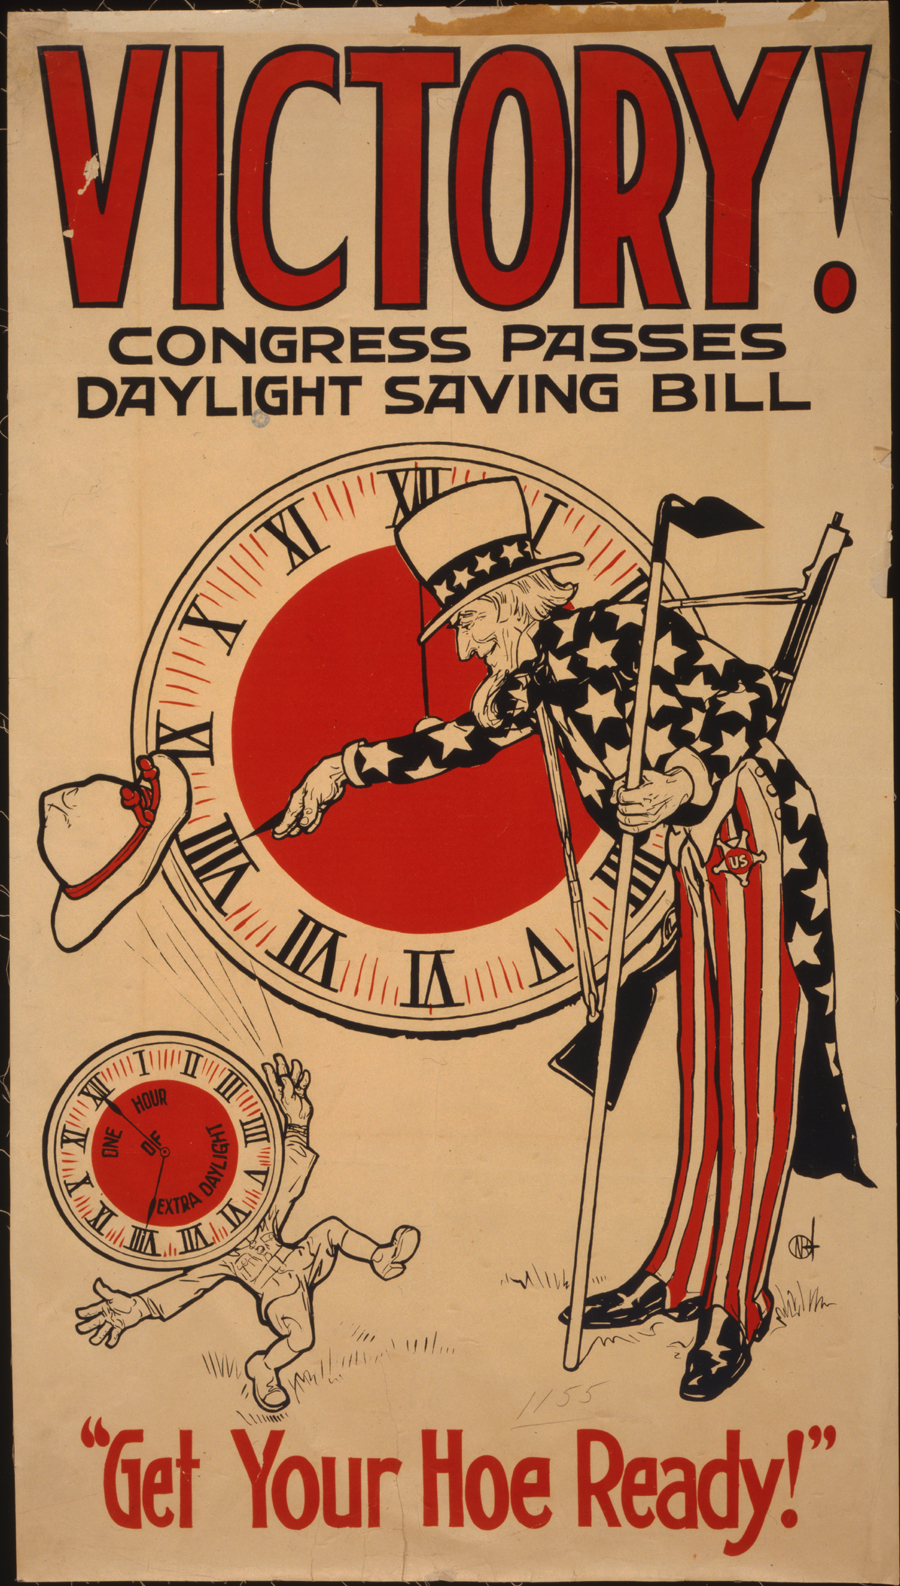 Featured Source: Congress passes daylight saving bill